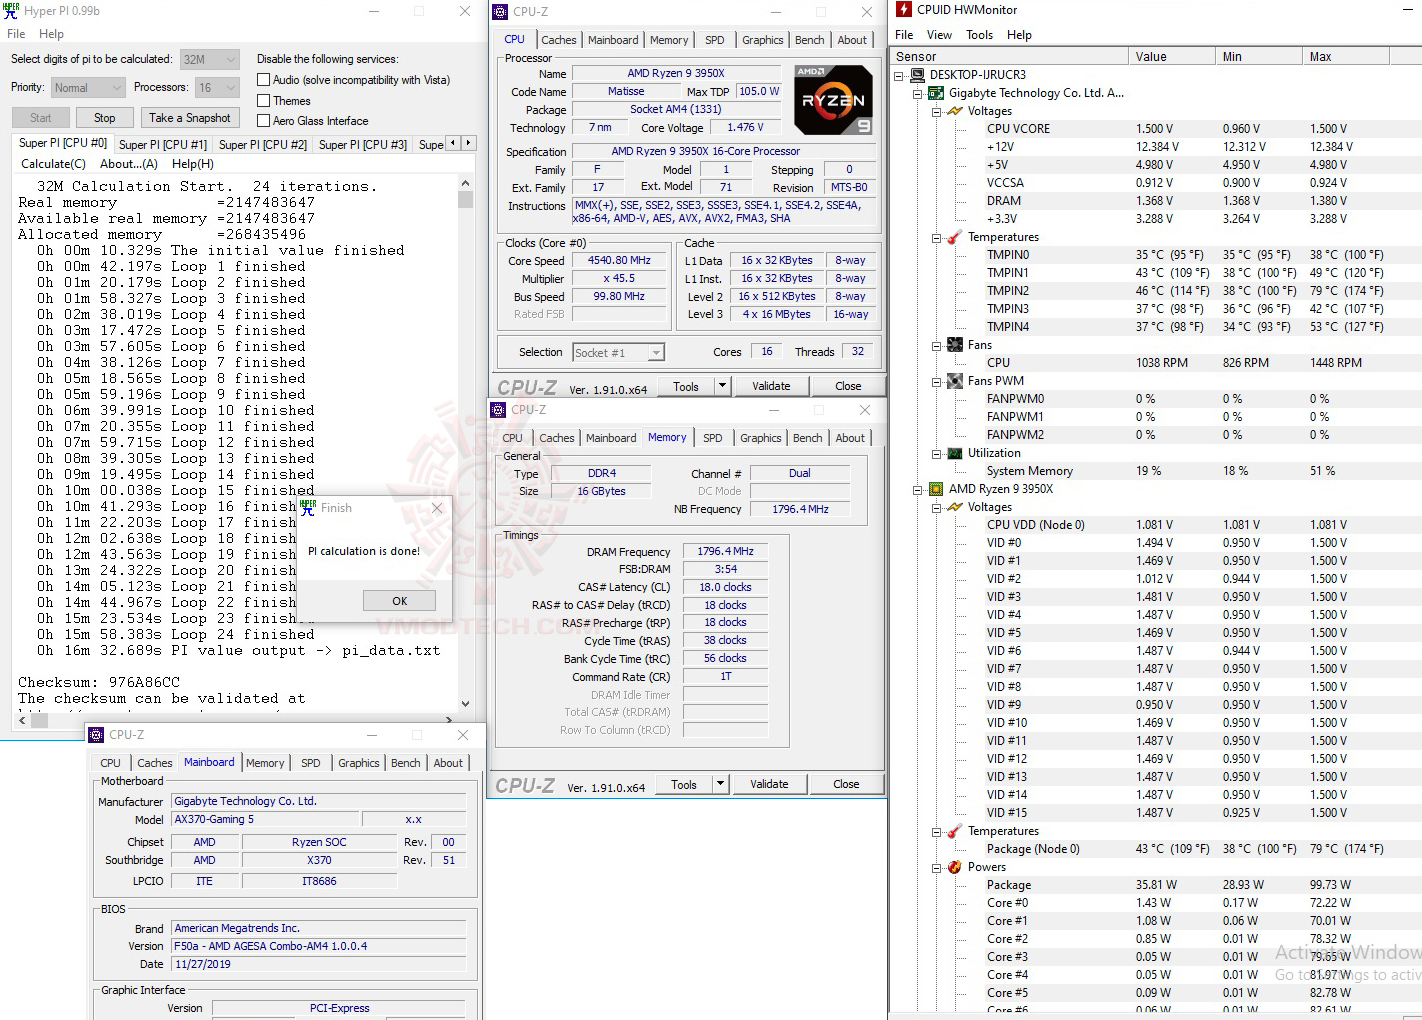 h32 1 AMD RYZEN 9 3950X PROCESSOR REVIEW 